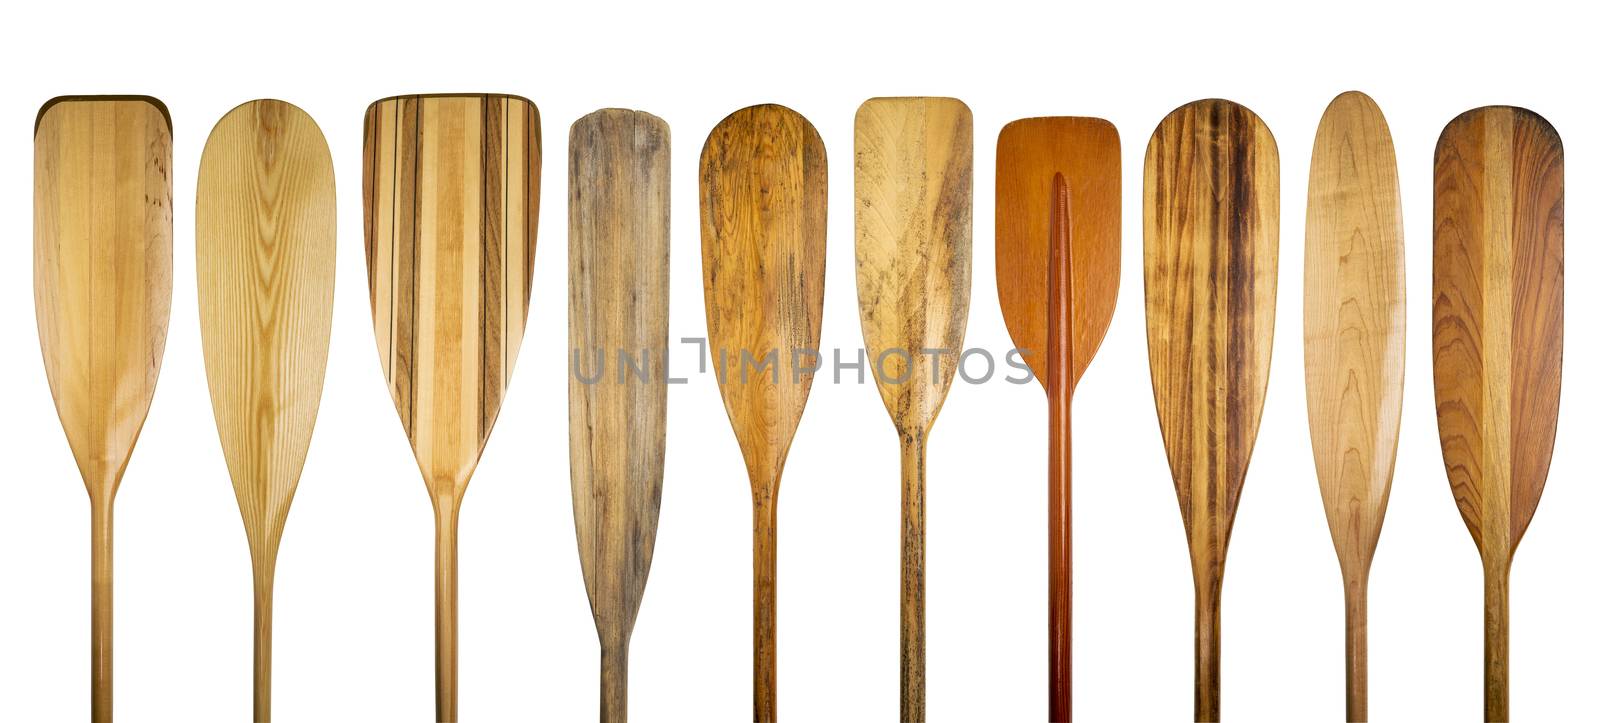 wooden canoe paddles by PixelsAway